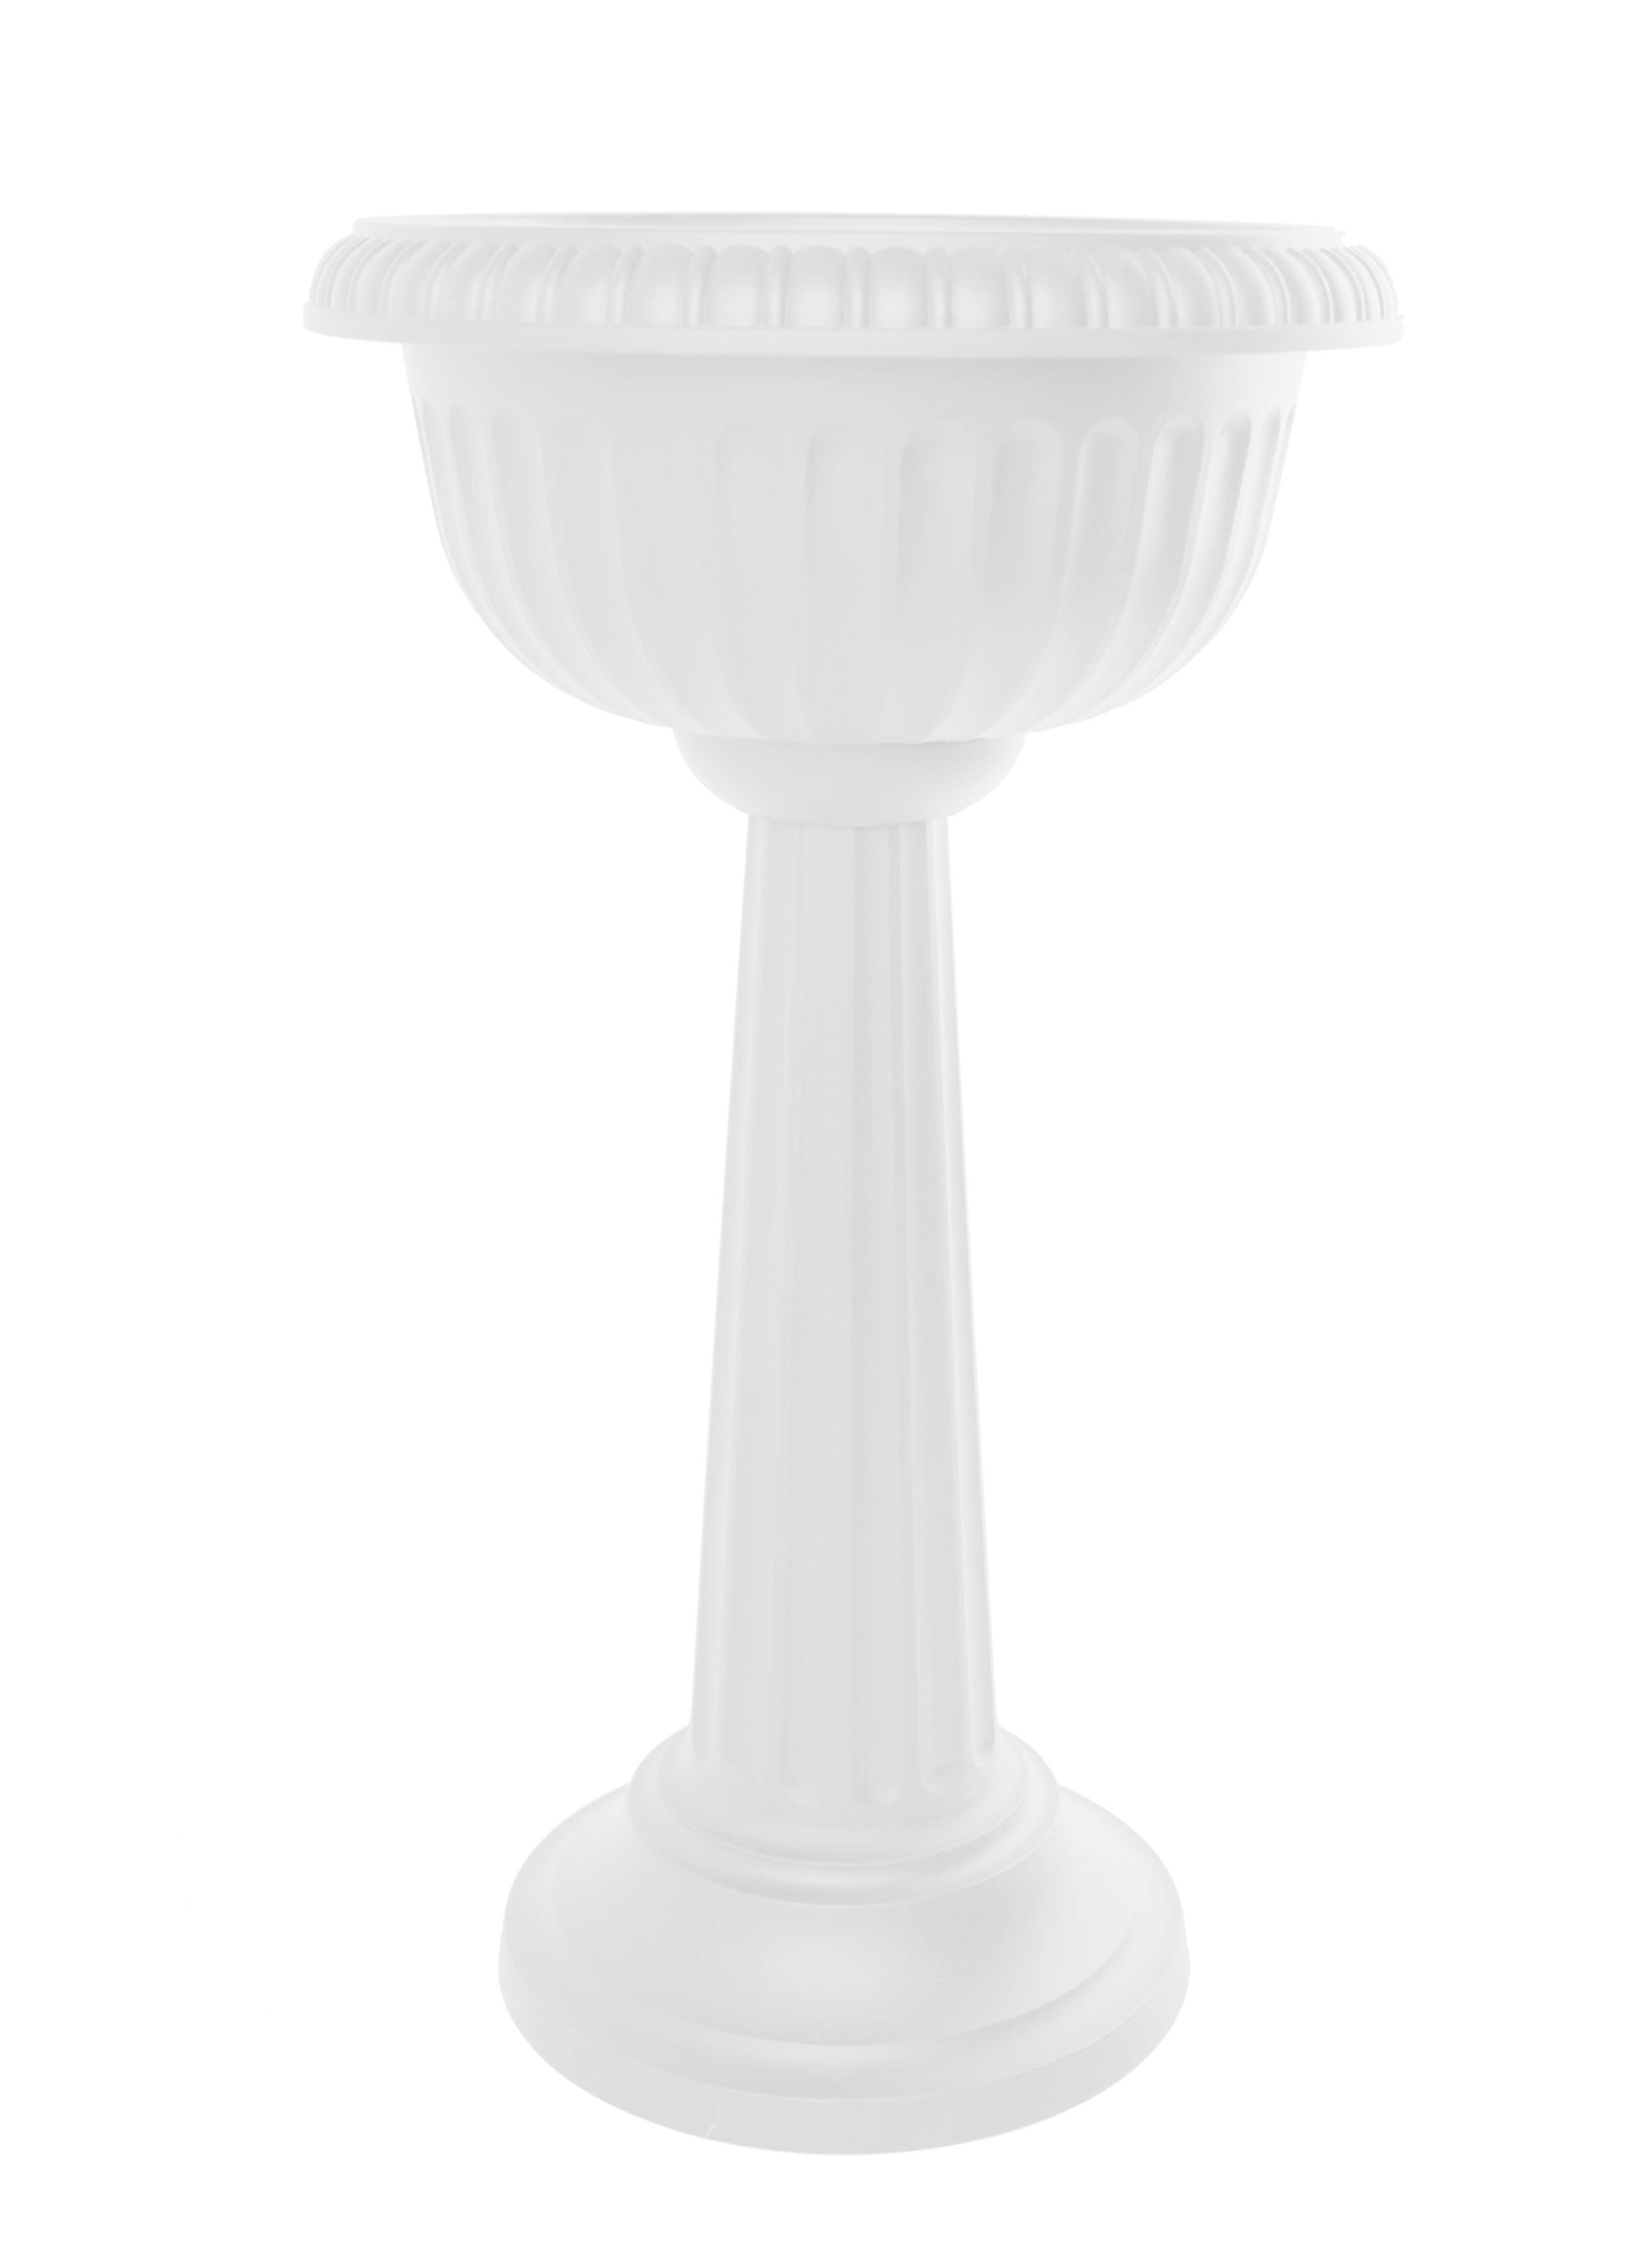 Casper White Grecian Urn Pedestal Planter, 32" Tall